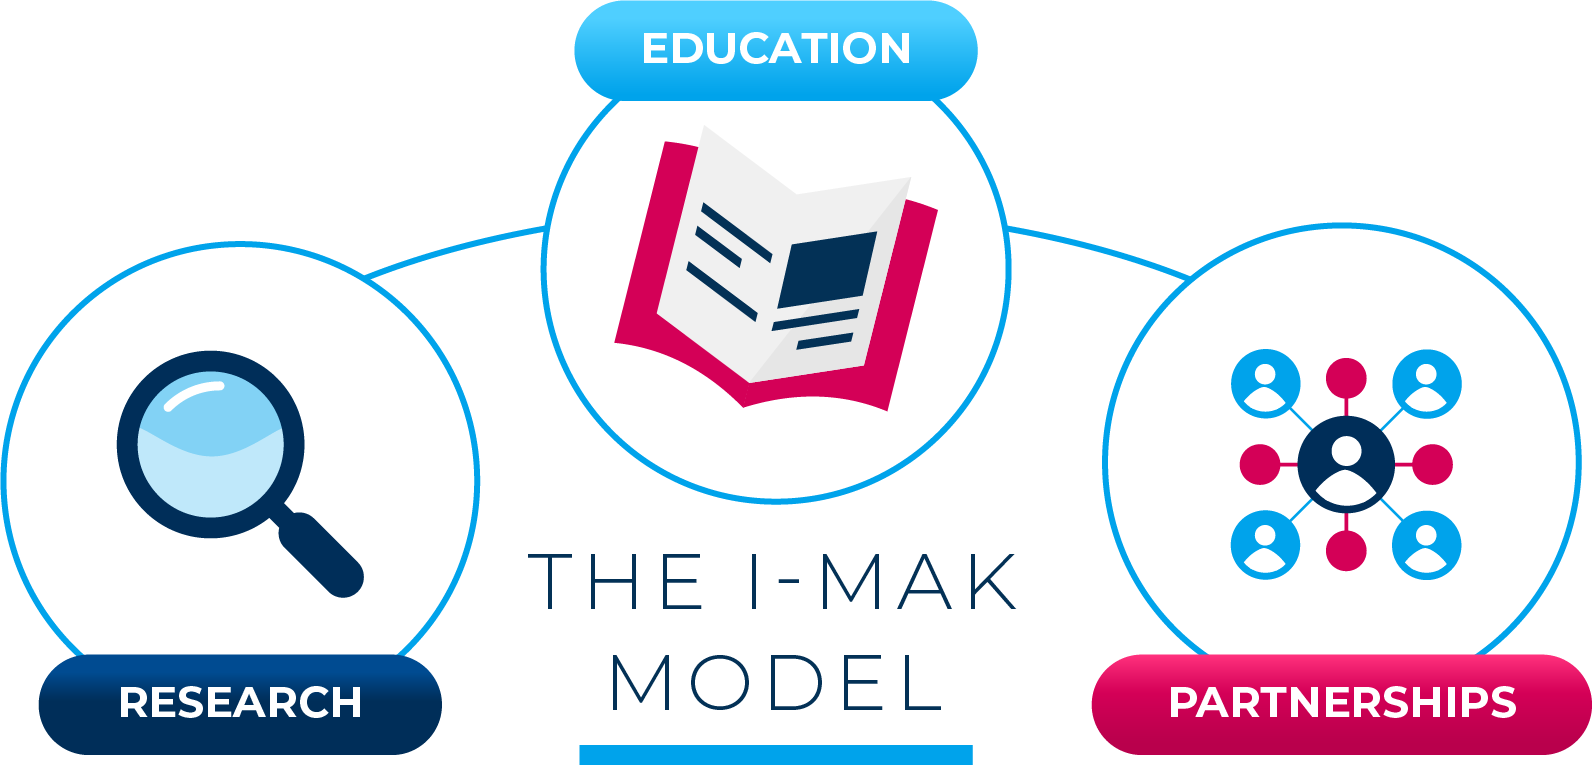 The I-MAK Model: Research, Education, Partnerships